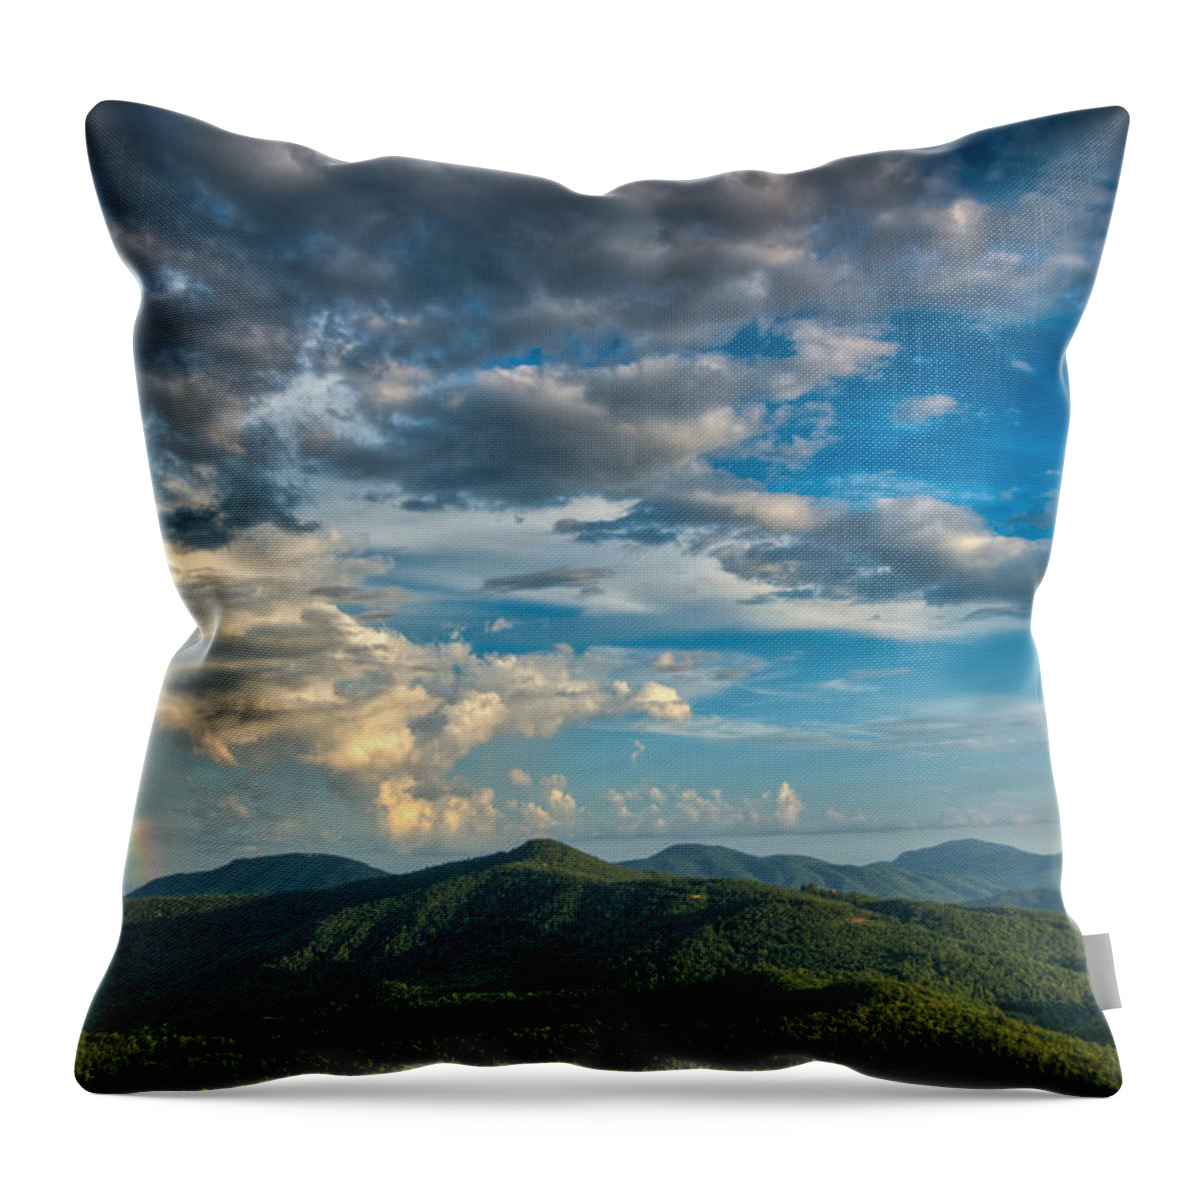 Joye Ardyn Durham Throw Pillow featuring the photograph Hidden Rainbow by Joye Ardyn Durham